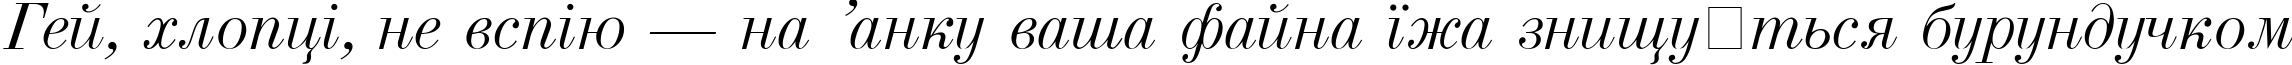 Пример написания шрифтом Usual New Italic текста на украинском